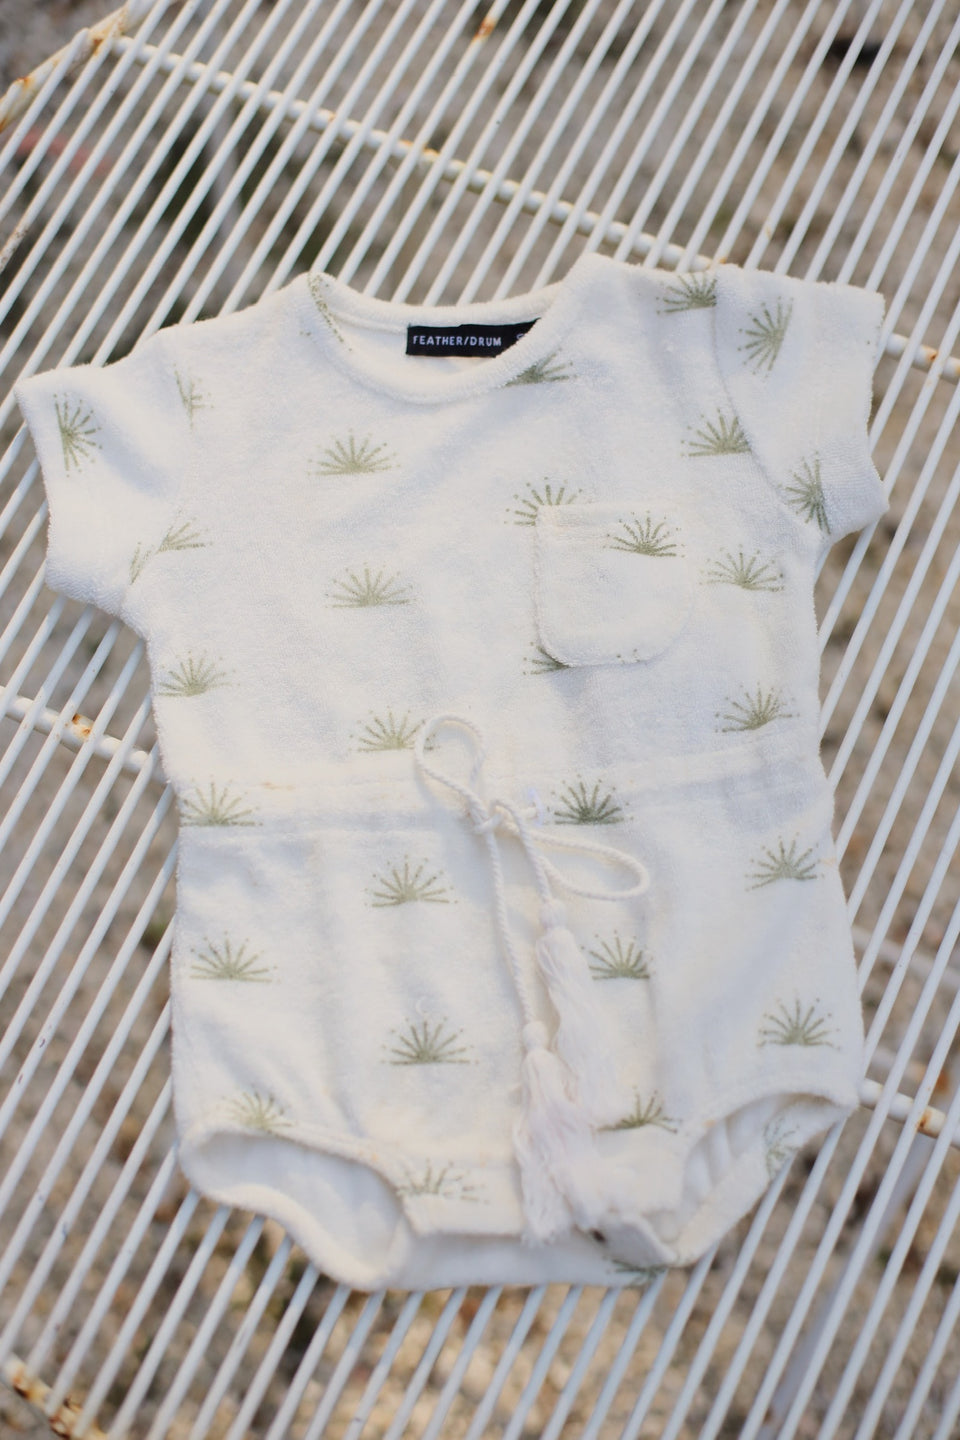 BABY ONESIE TEE - RISING SUN TERRY CLOTH